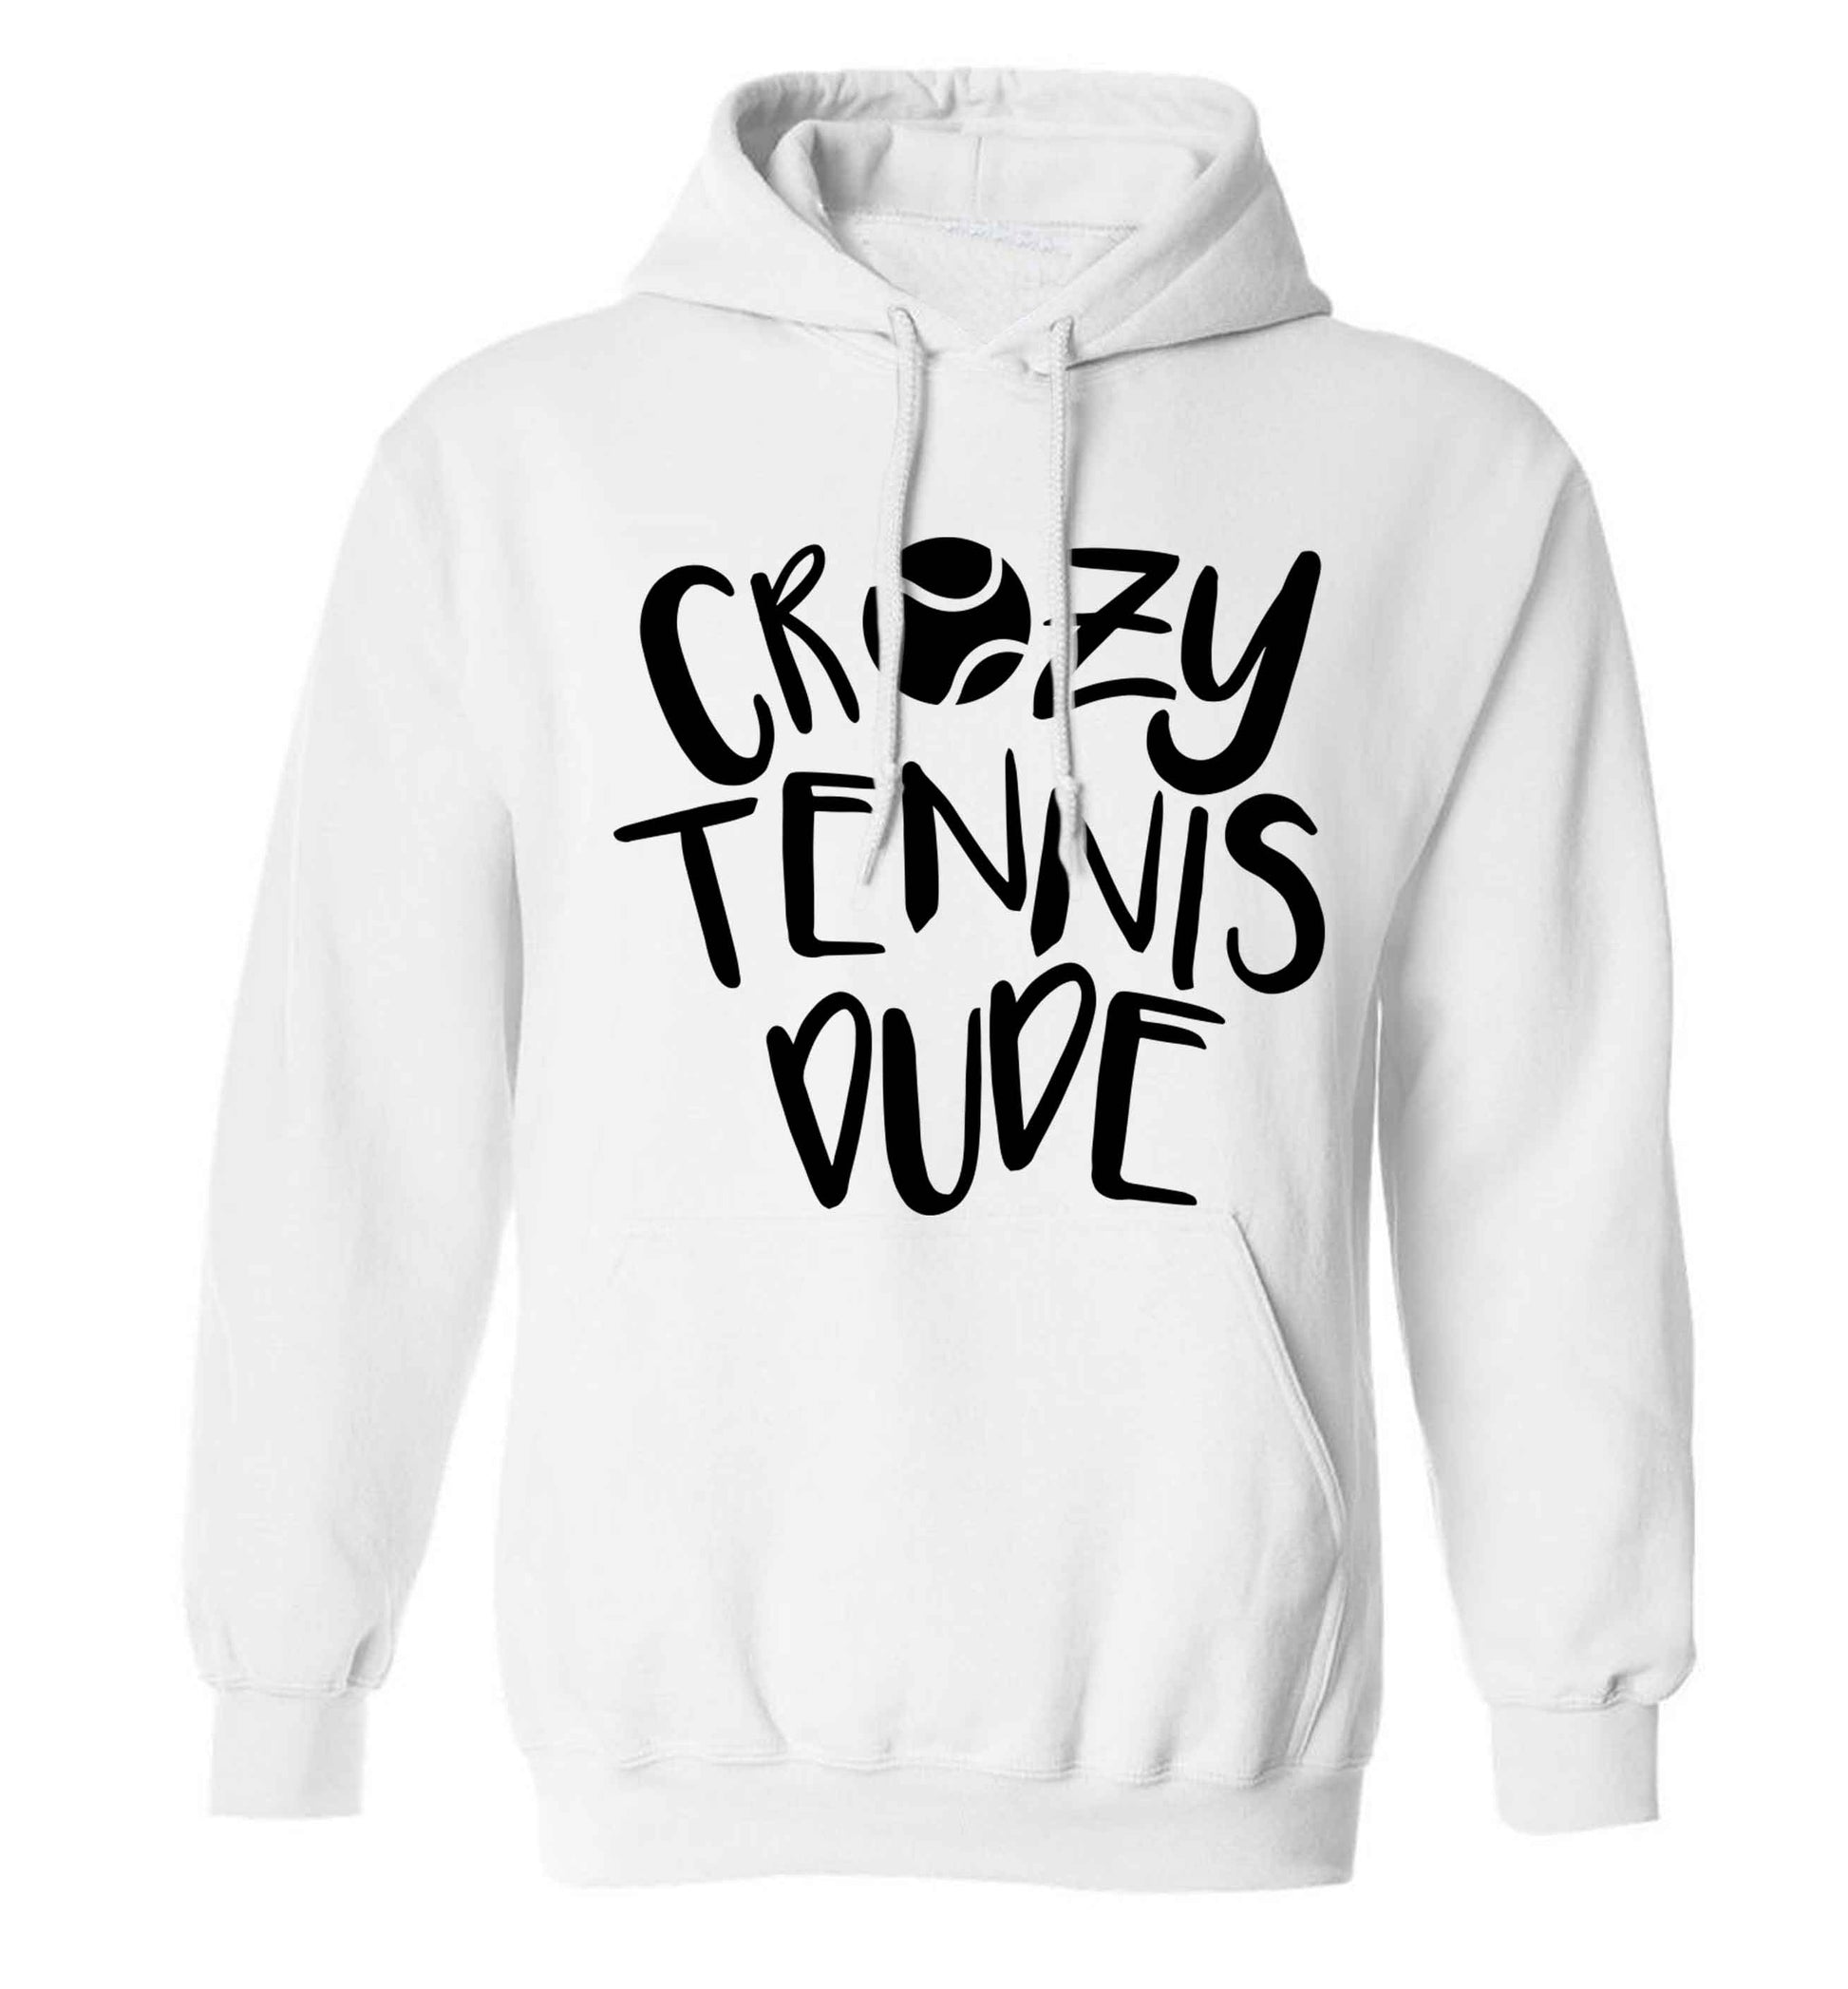 Crazy tennis dude adults unisex white hoodie 2XL